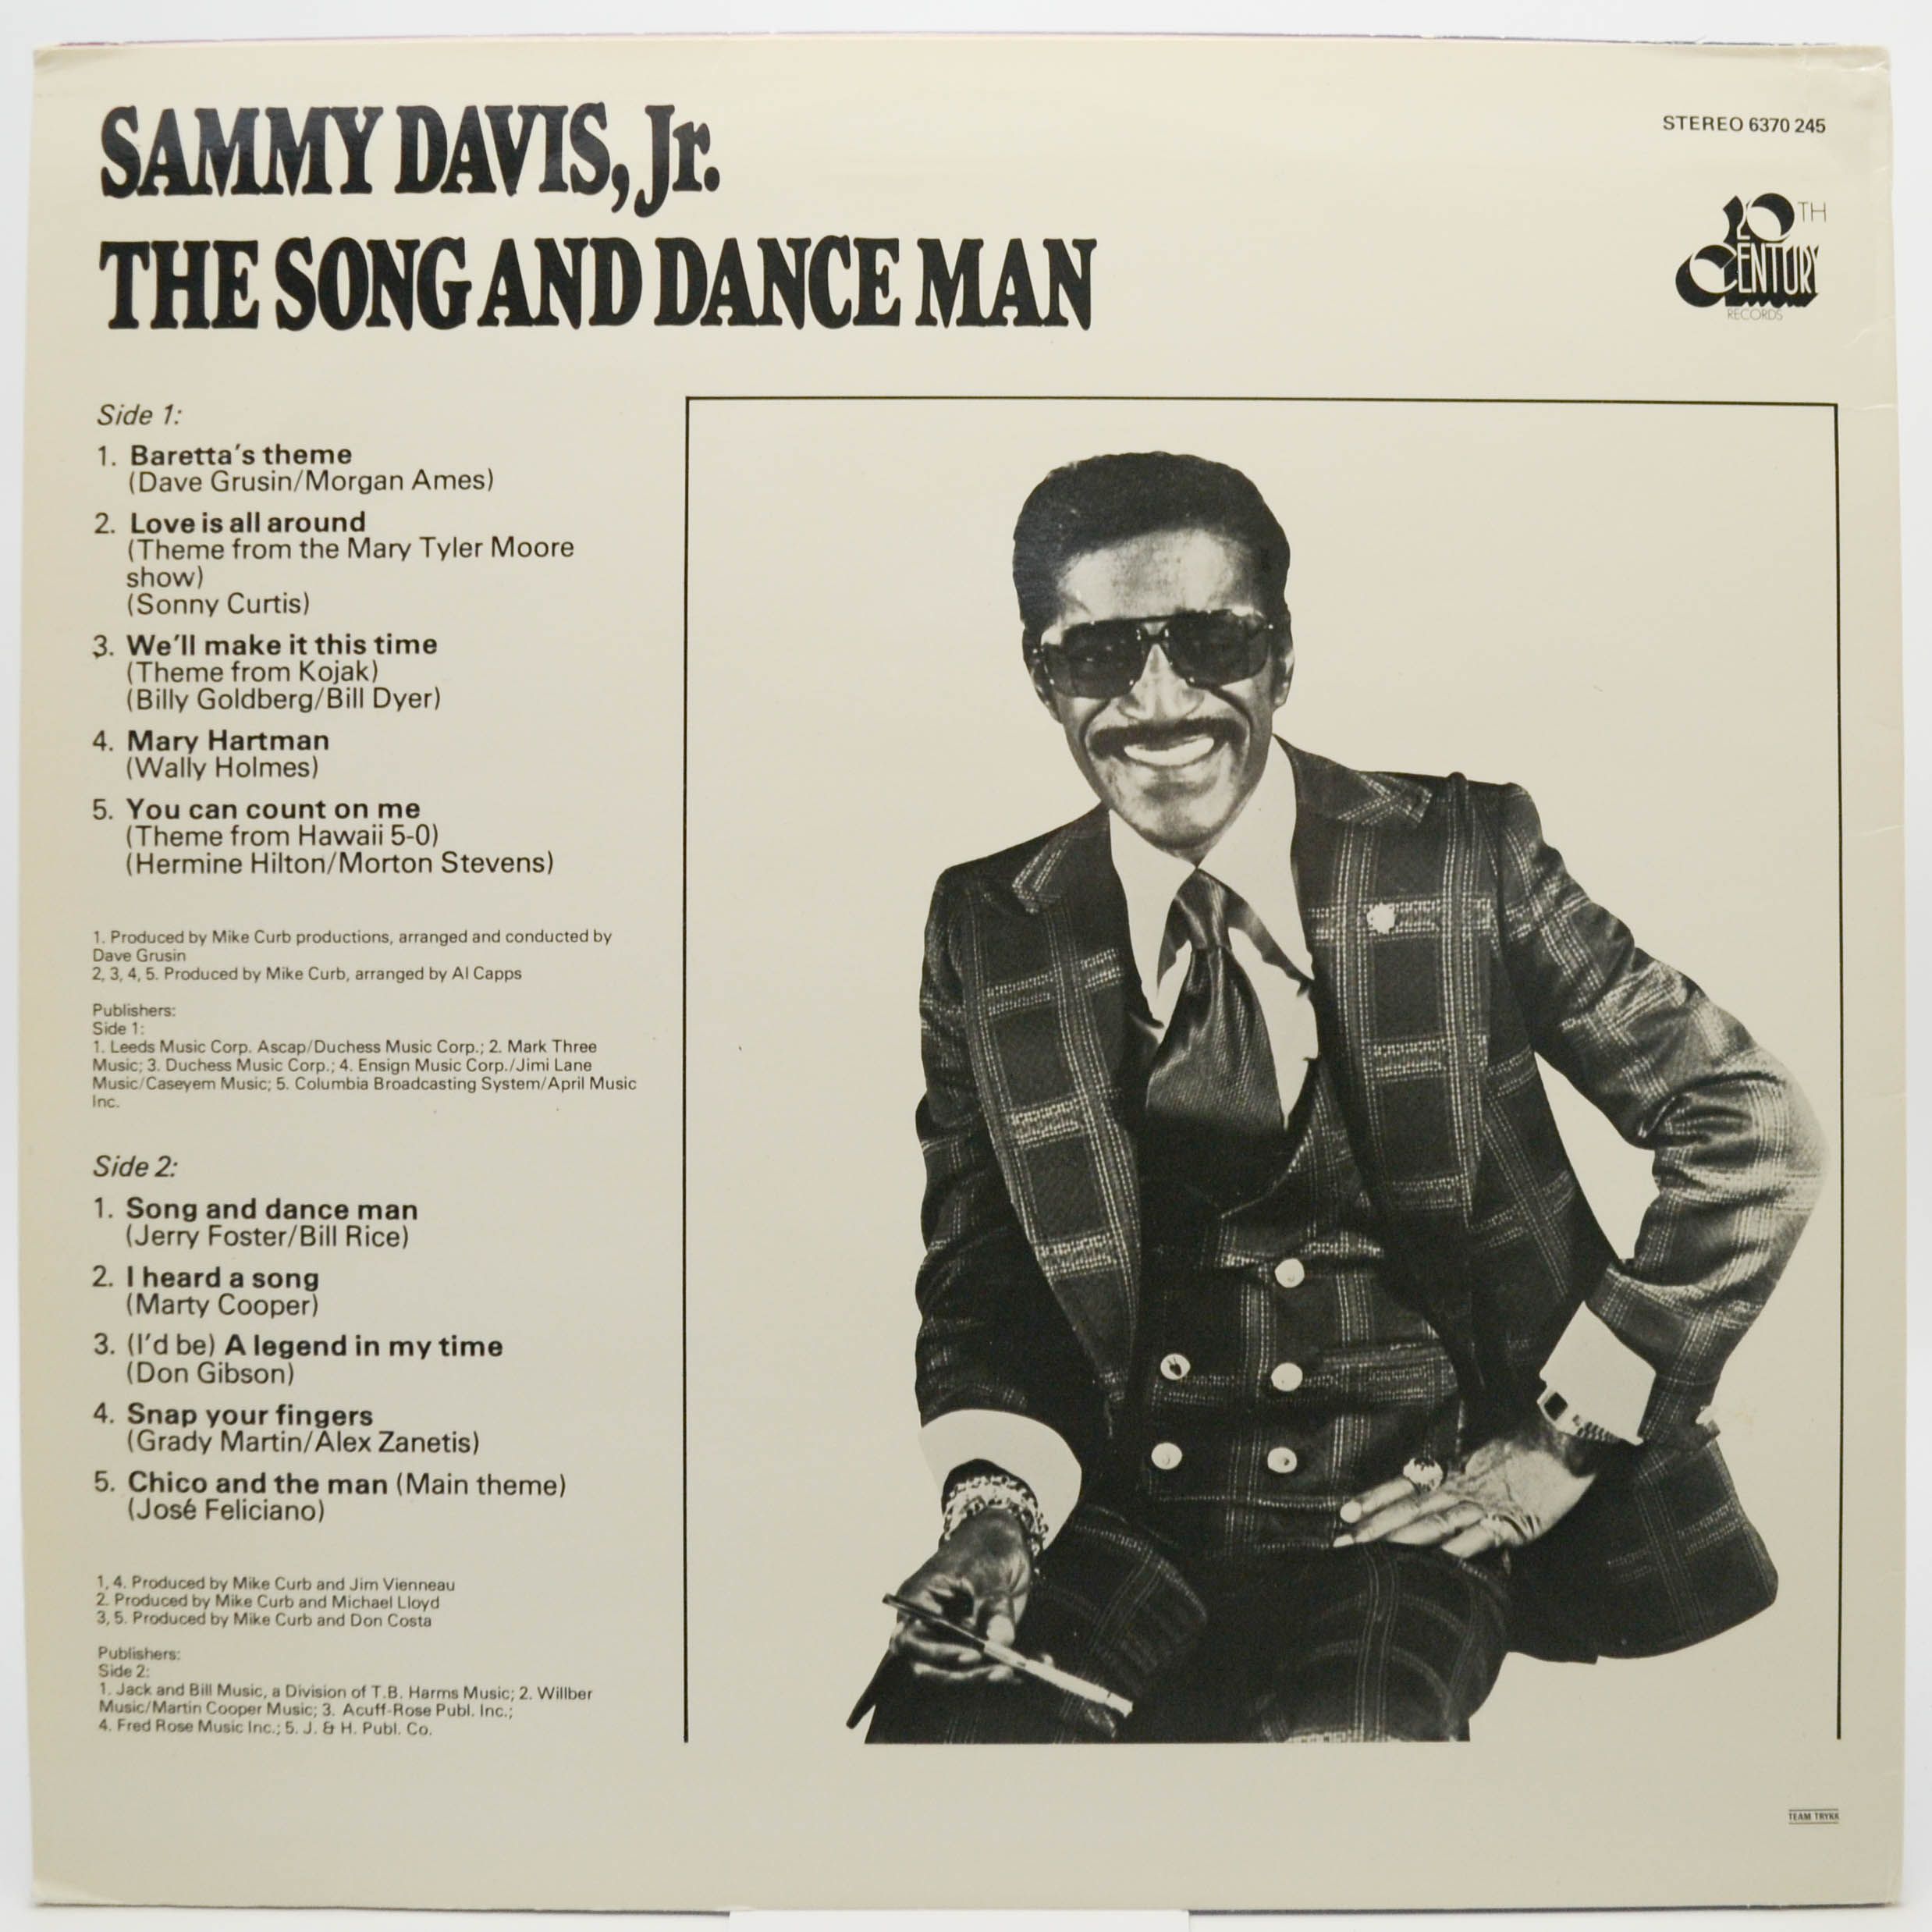 Sammy Davis Jr. — The Song And Dance Man, 1976